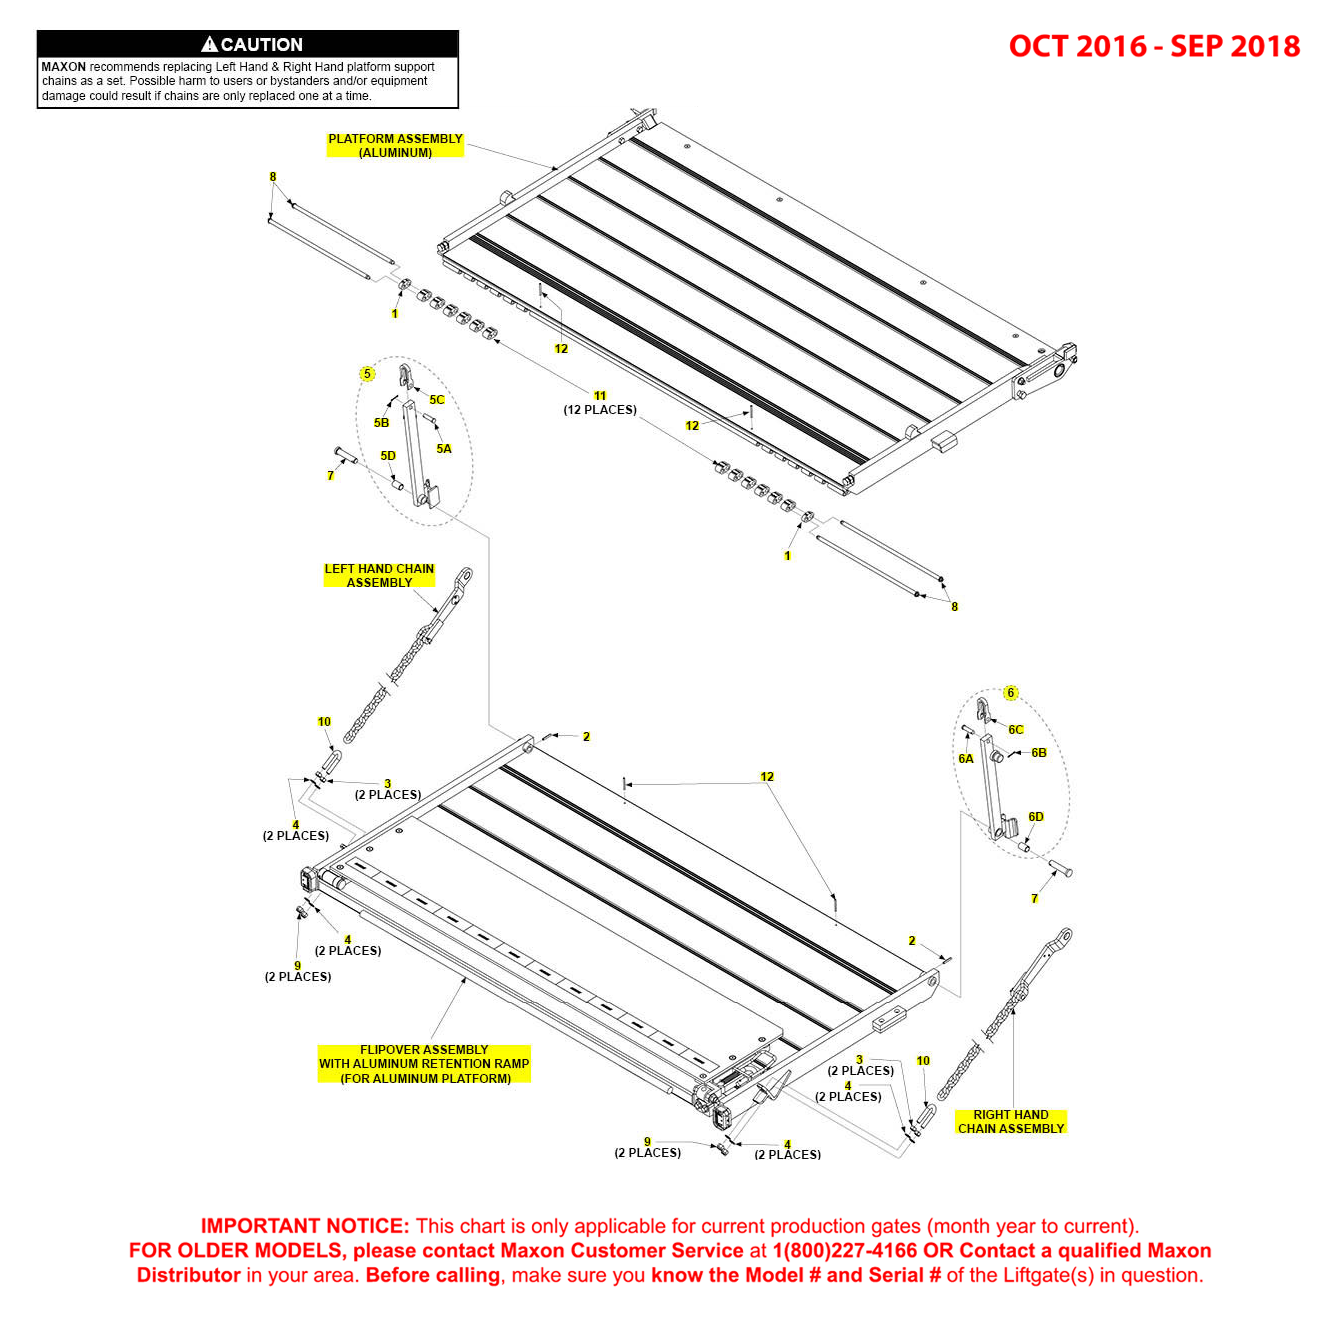 Maxon BMR (Oct 2016 - Sep 2018) Aluminum Platform Flipover And Chain Assembly With Aluminum Retention Ramp Diagram